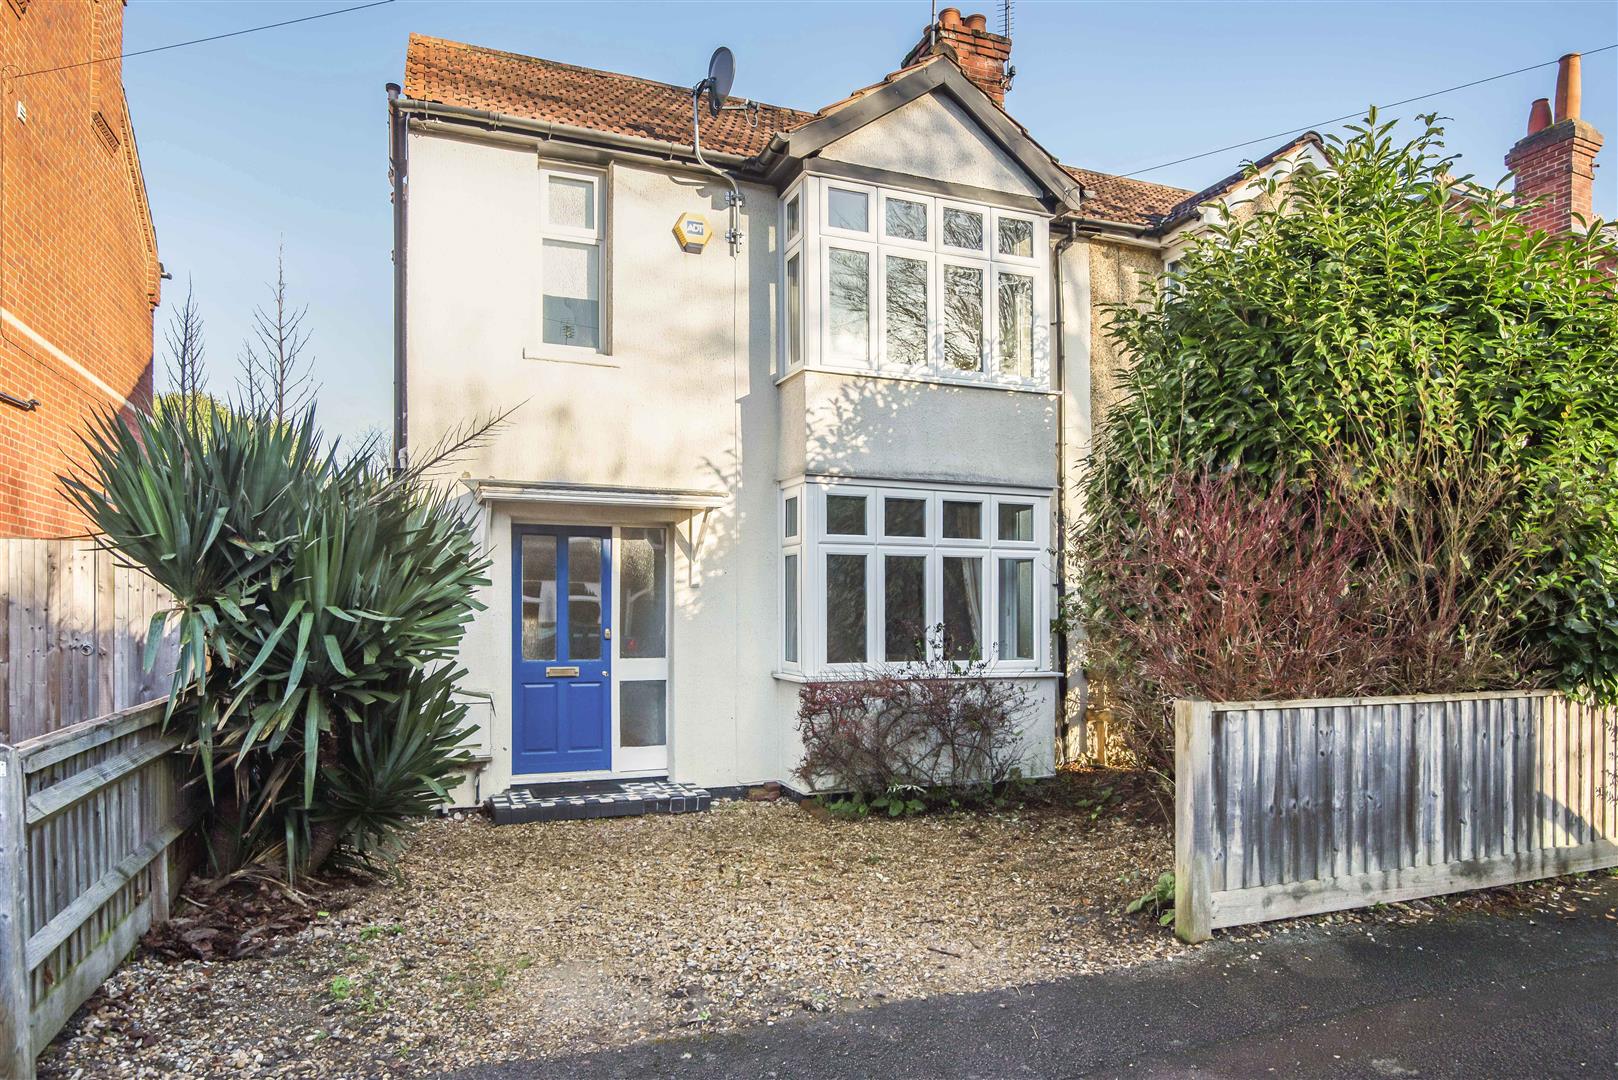 Matlock Road Caversham house for sale in Reading